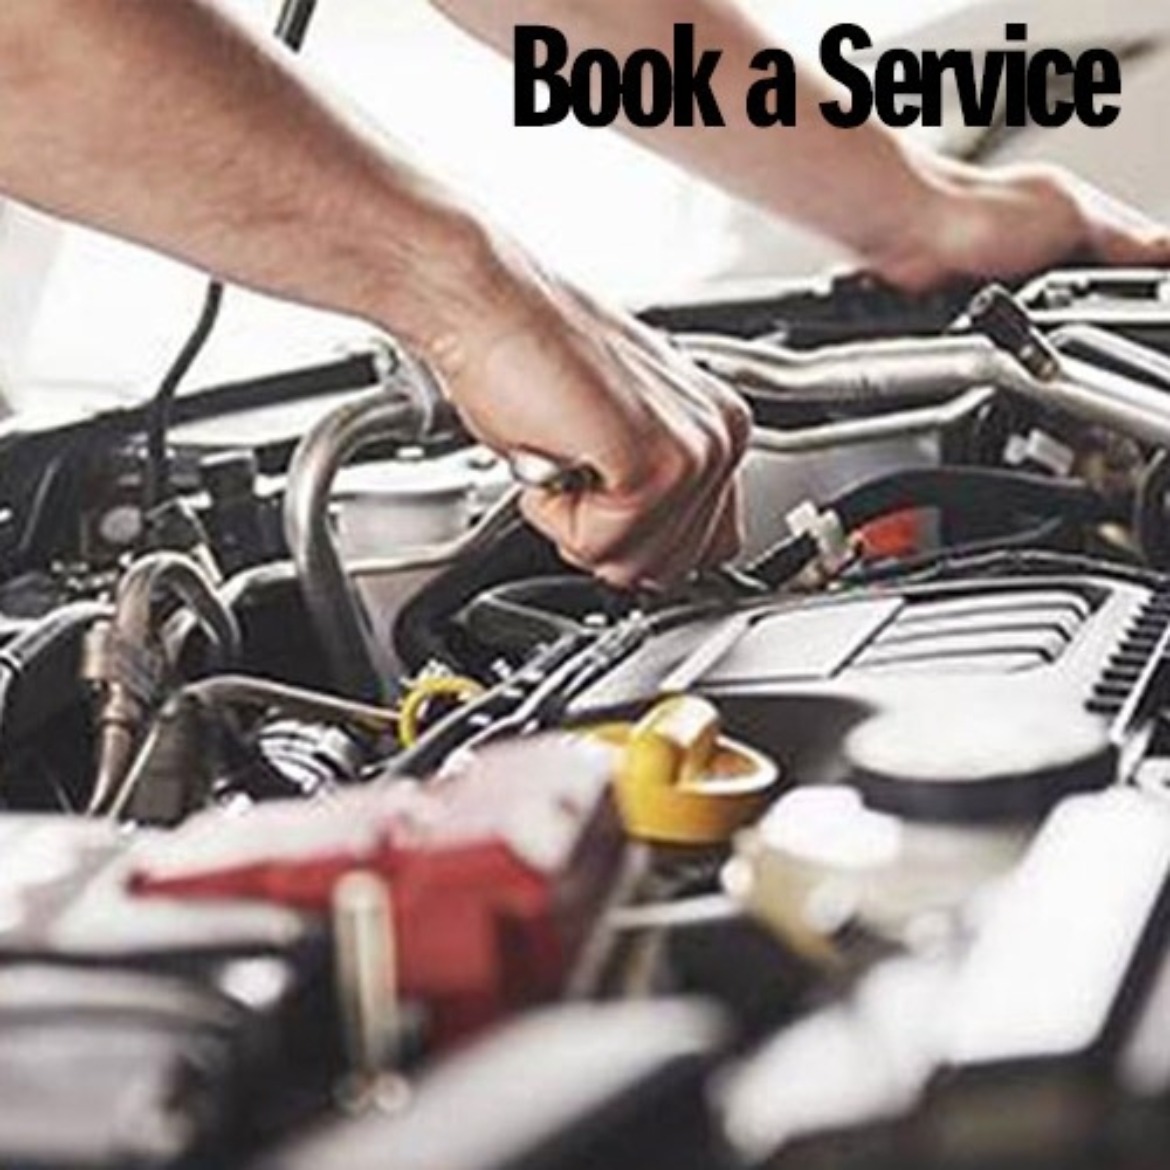 Book a Service at Drayton Motors Suzuki